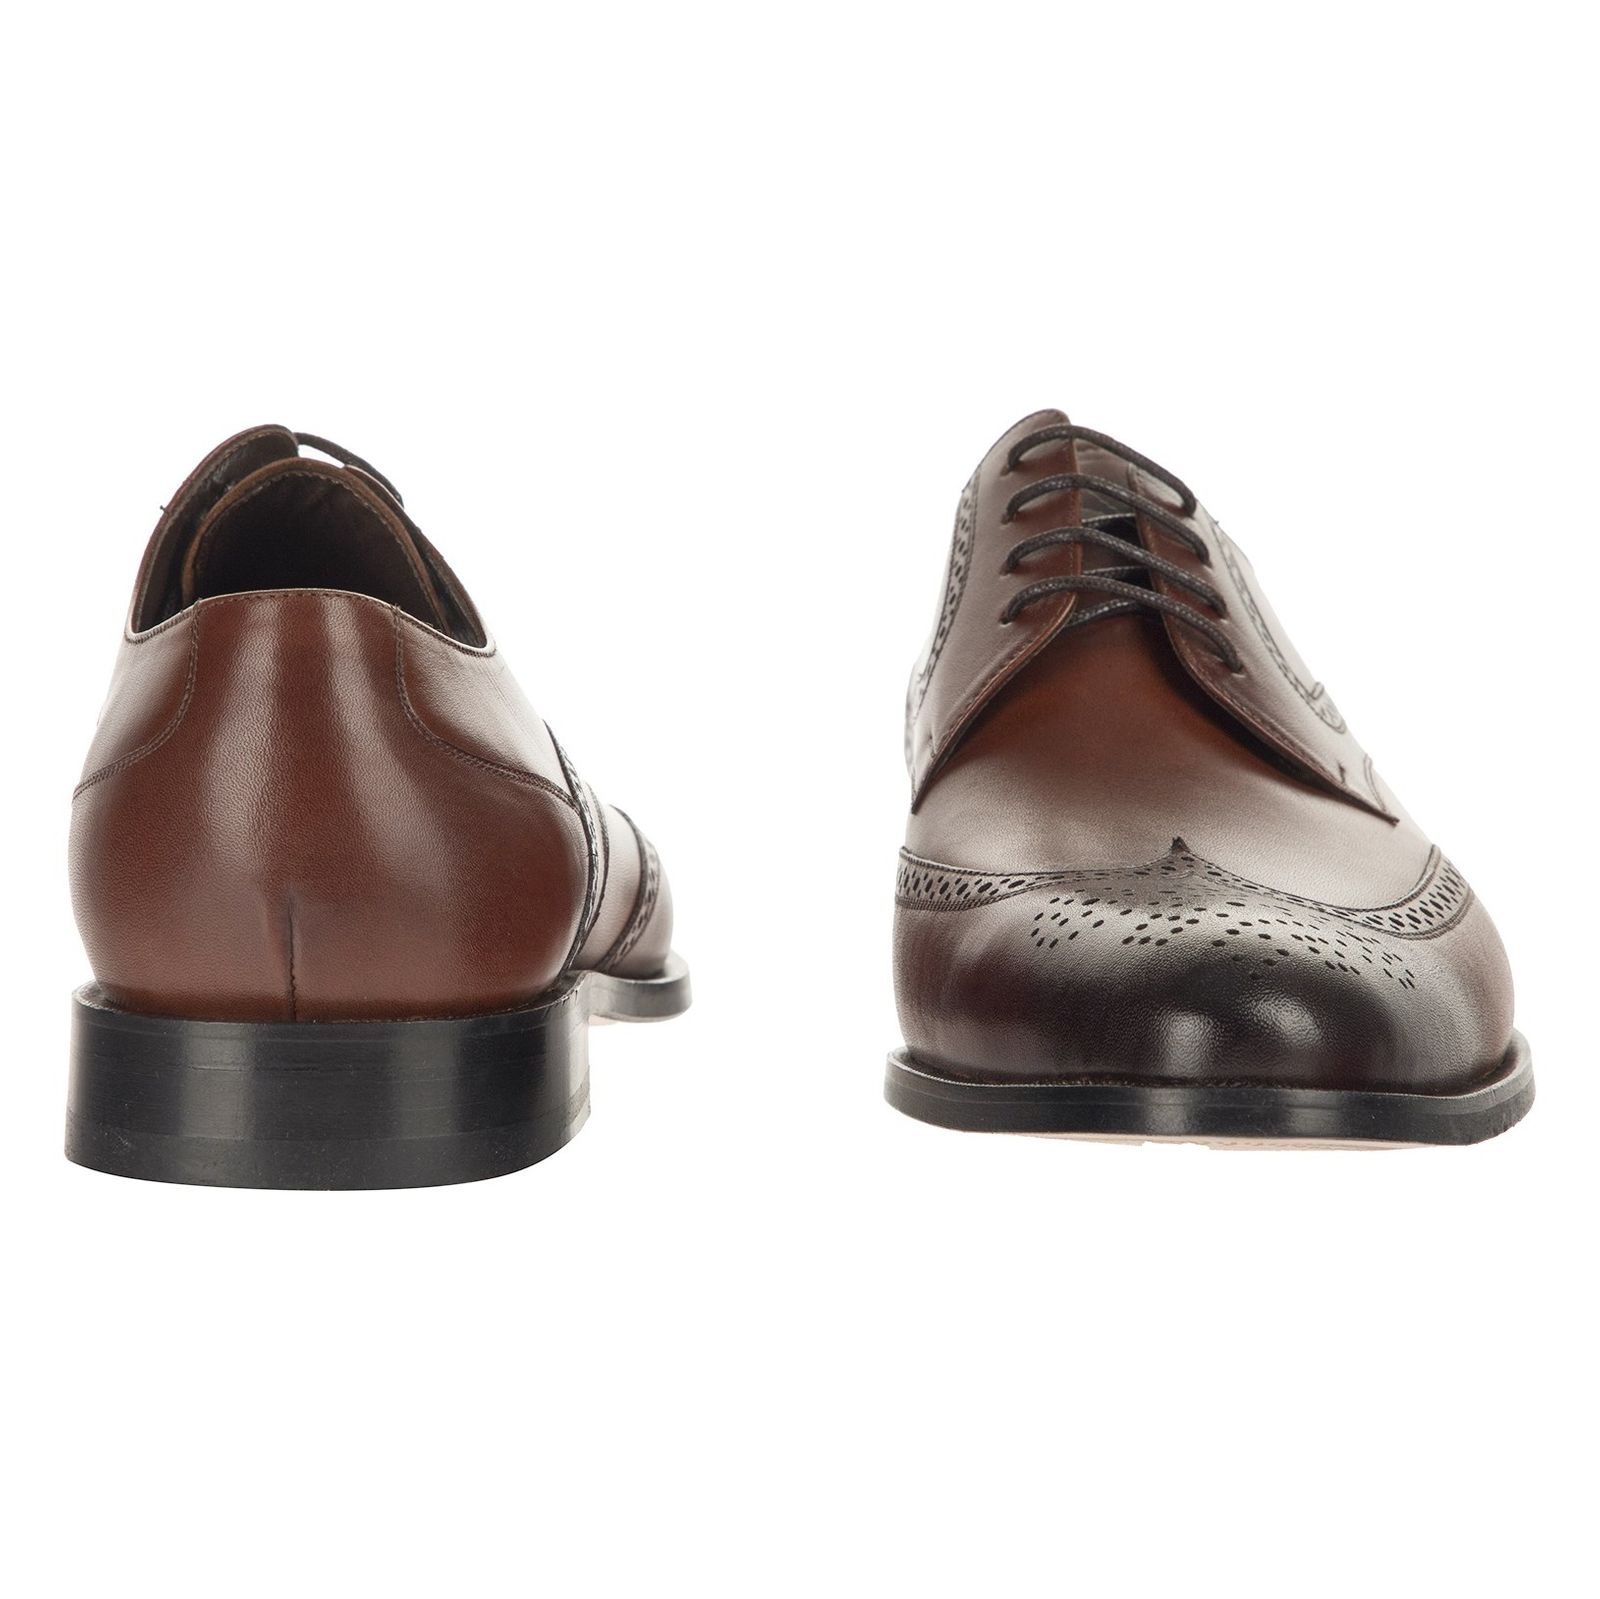 کفش رسمی چرم مردانه - گاندو - قهوه اي - 5